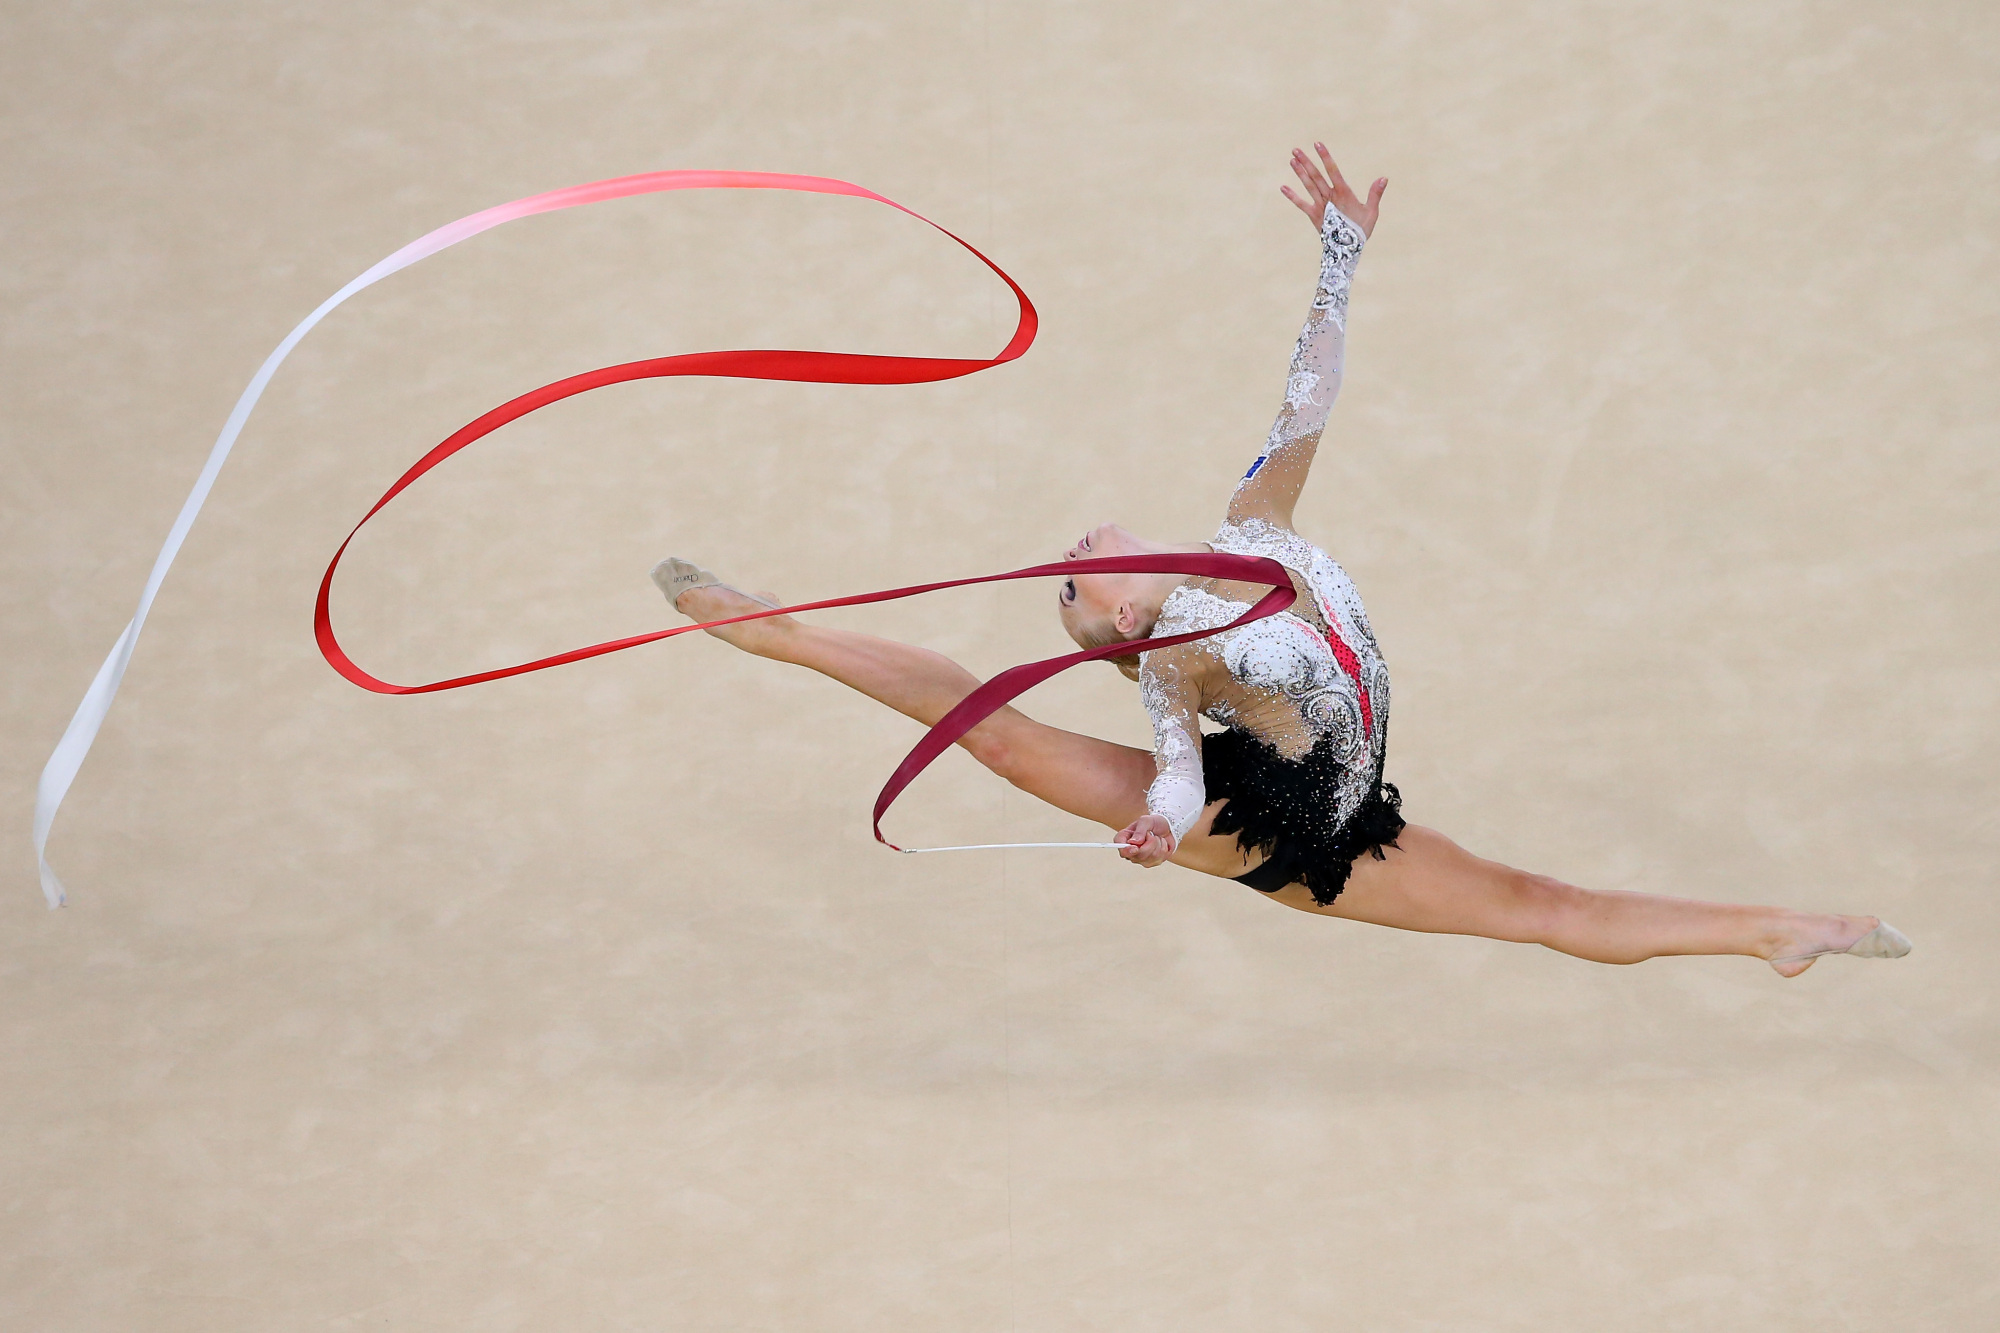 Une gymnaste en pleine représentation de ruban